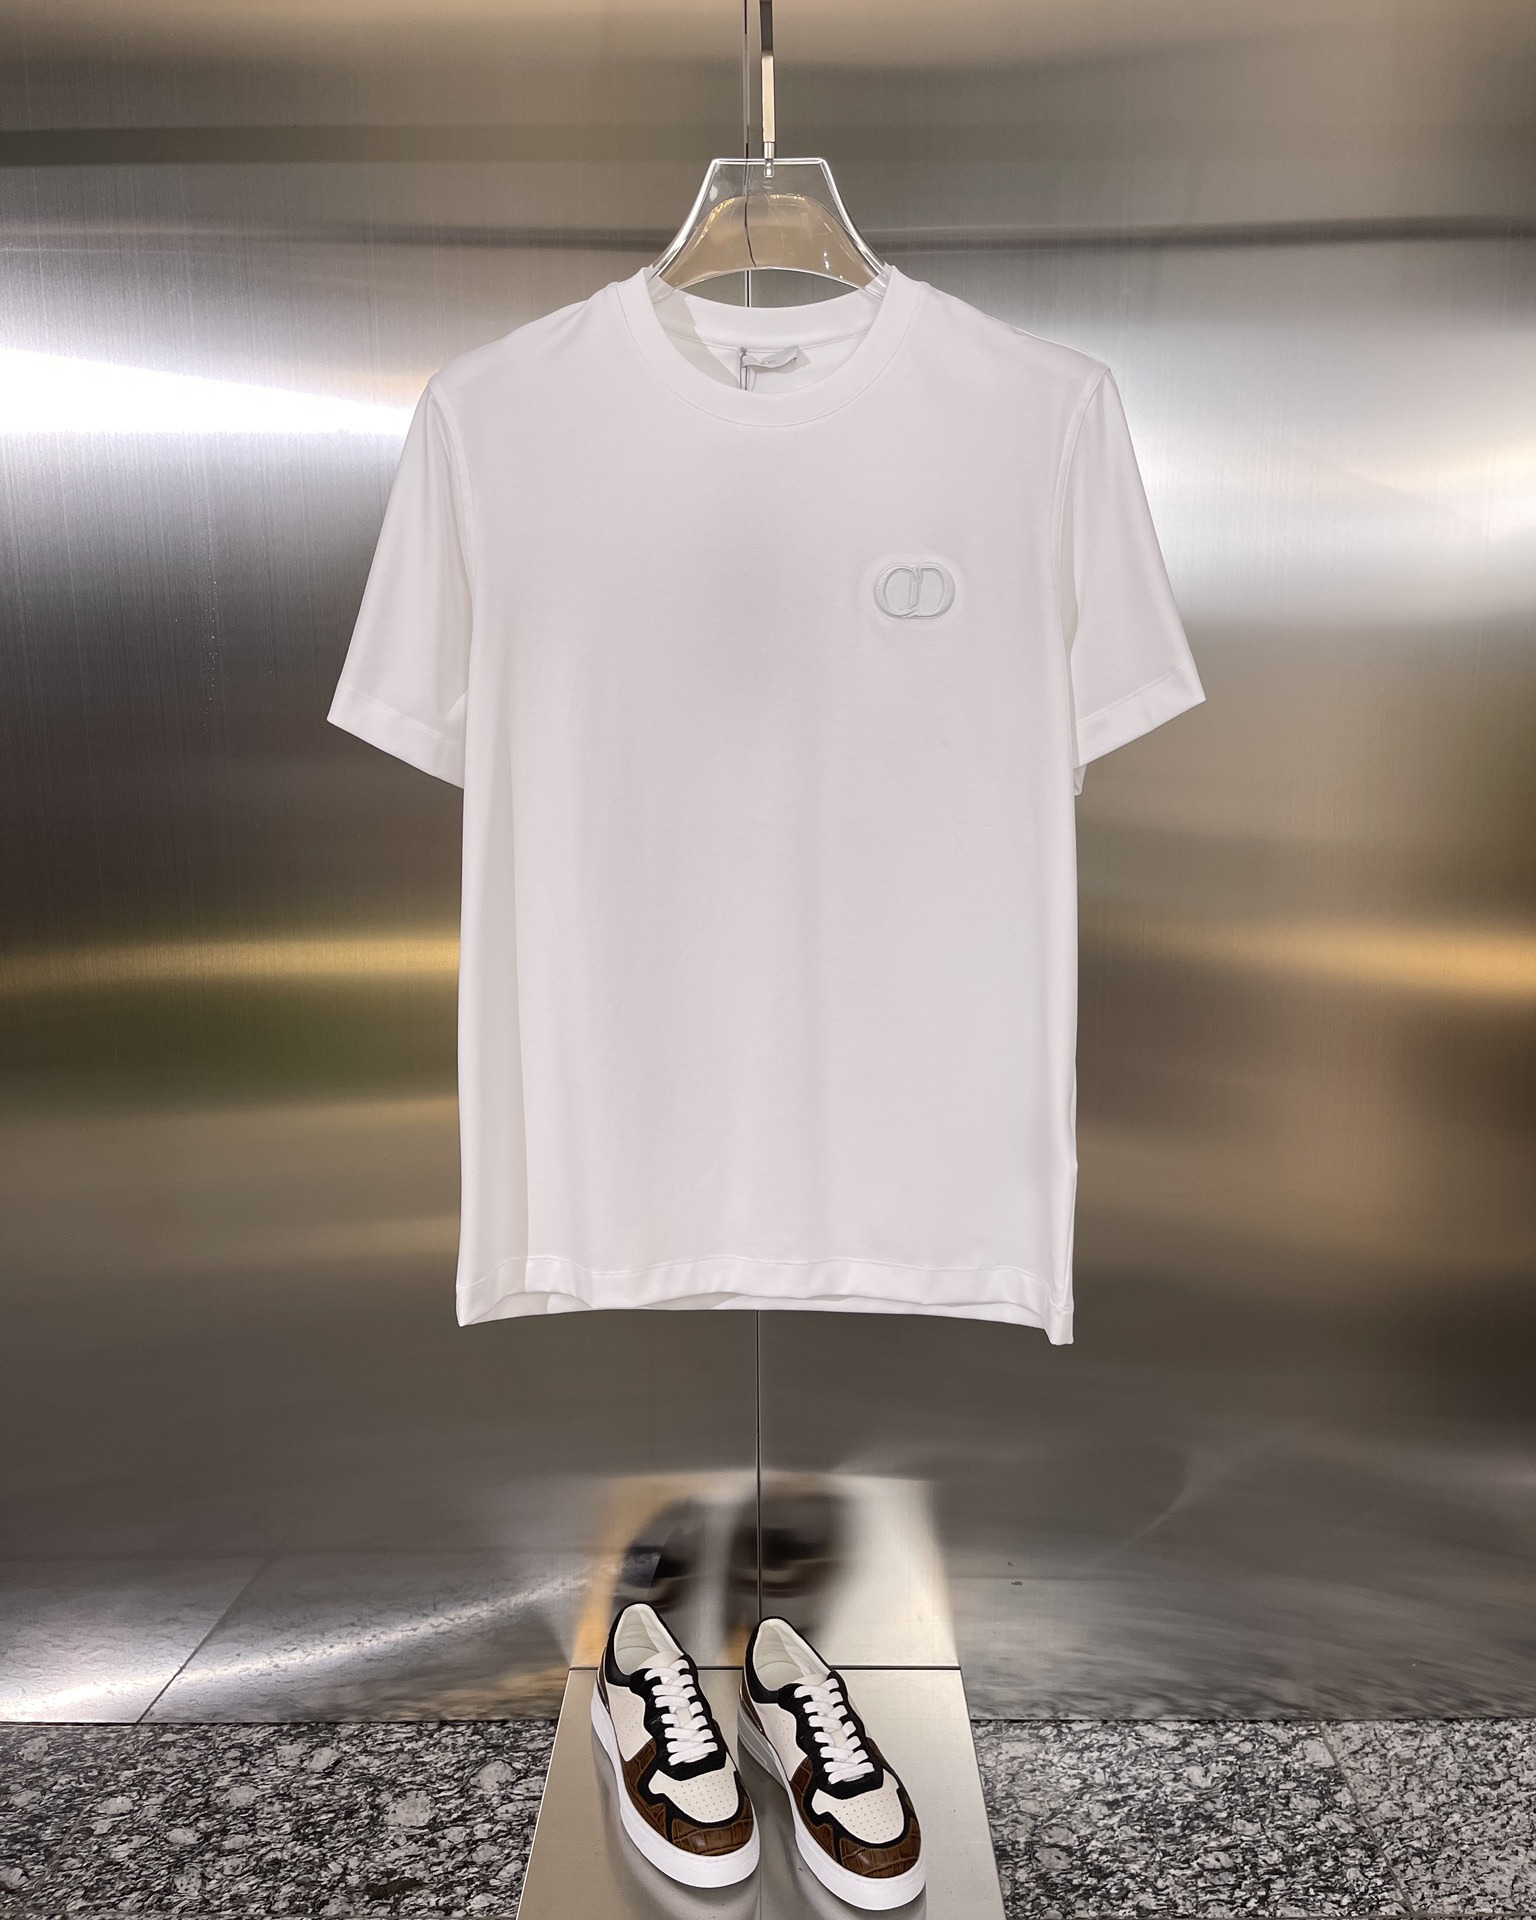 Dior Clothing T-Shirt Men Cotton Fashion Short Sleeve